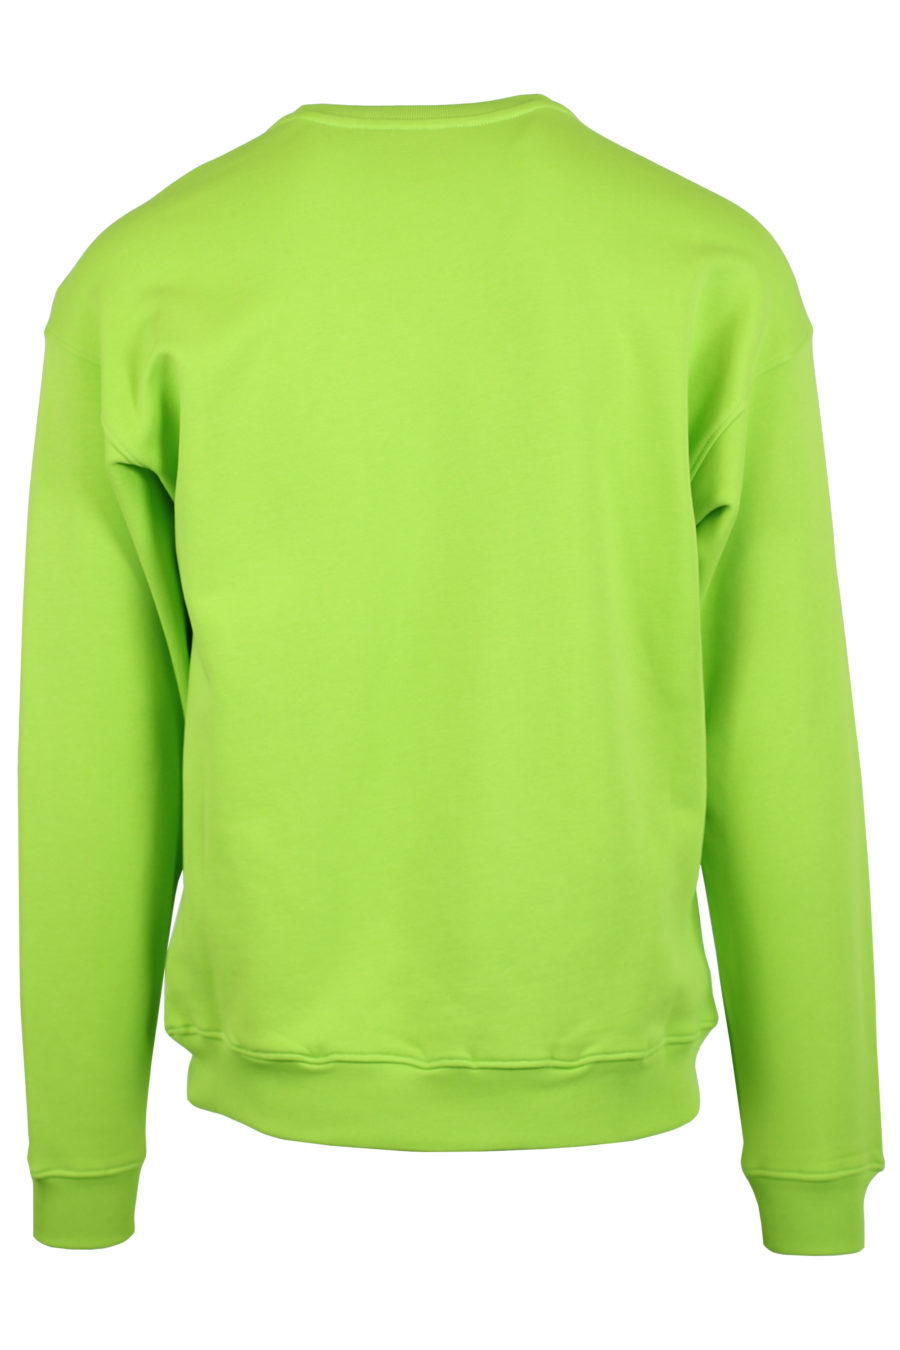 Fluor green sweatshirt with large logo - IMG 0907